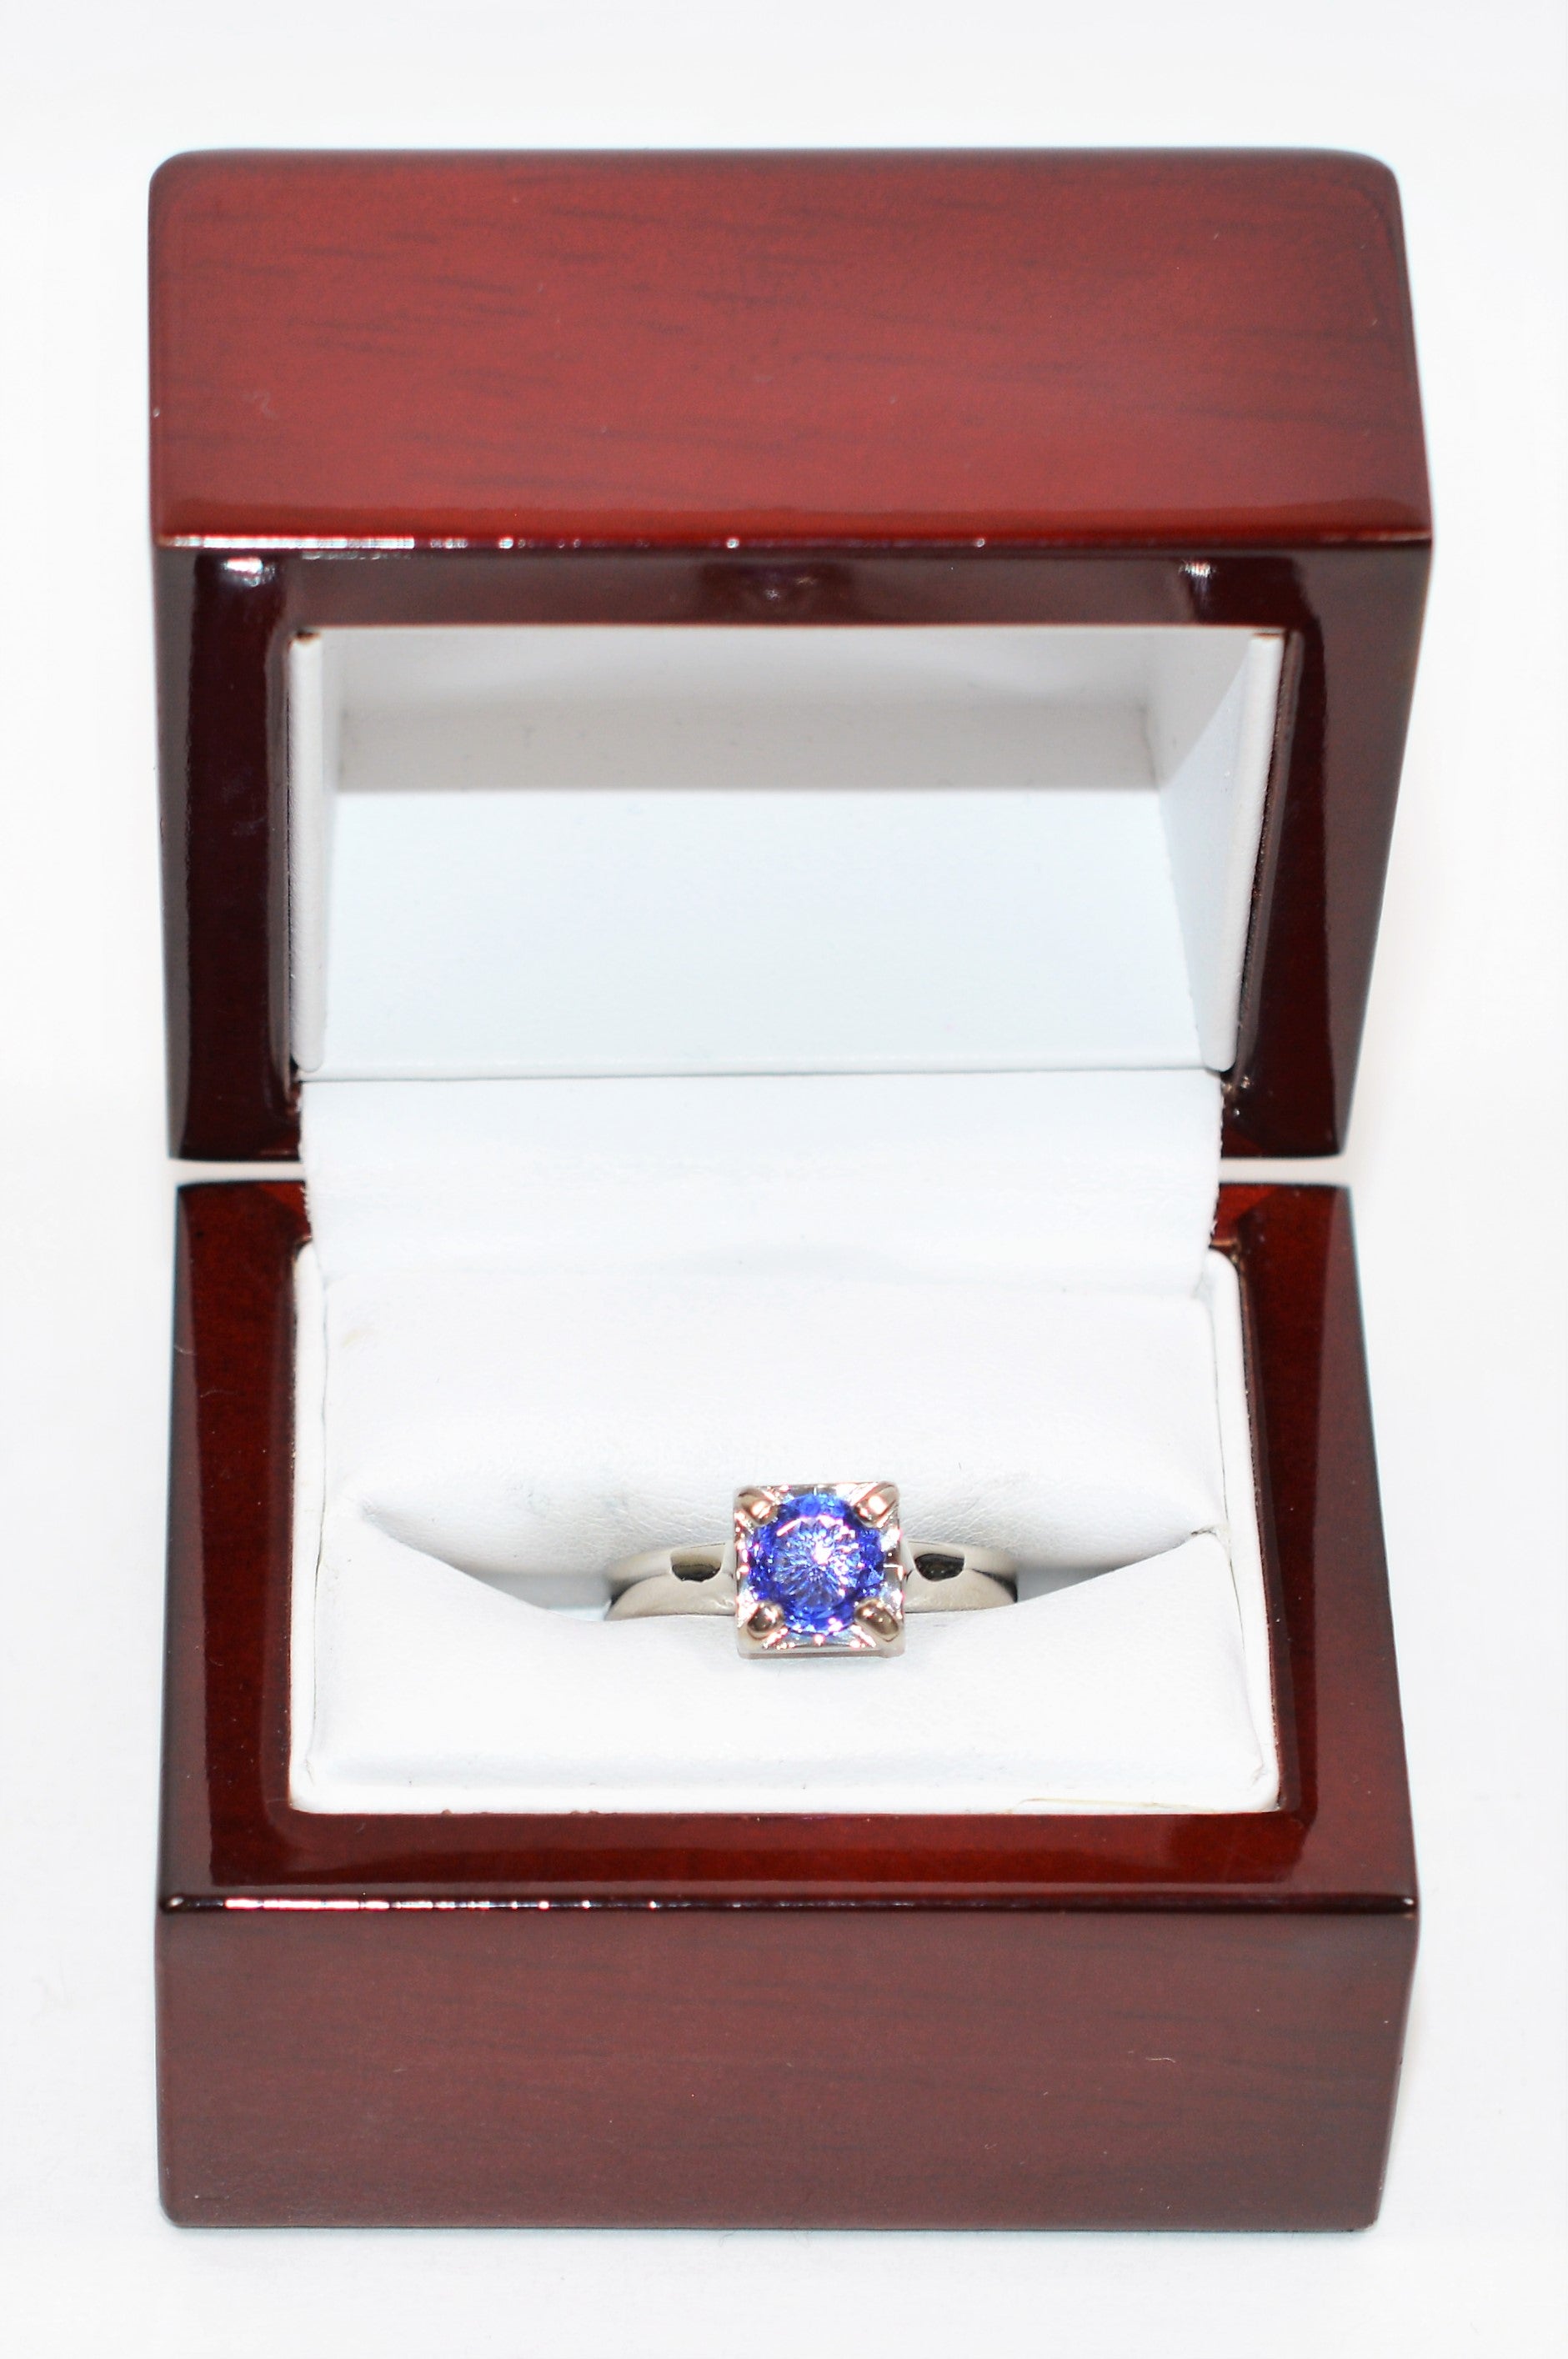 Scott Kay Natural D'Block Tanzanite Ring Solid Platinum 1ct Solitaire Ring Engagement Ring Designer Ring Bridal Jewelry Cocktail Ring Estate